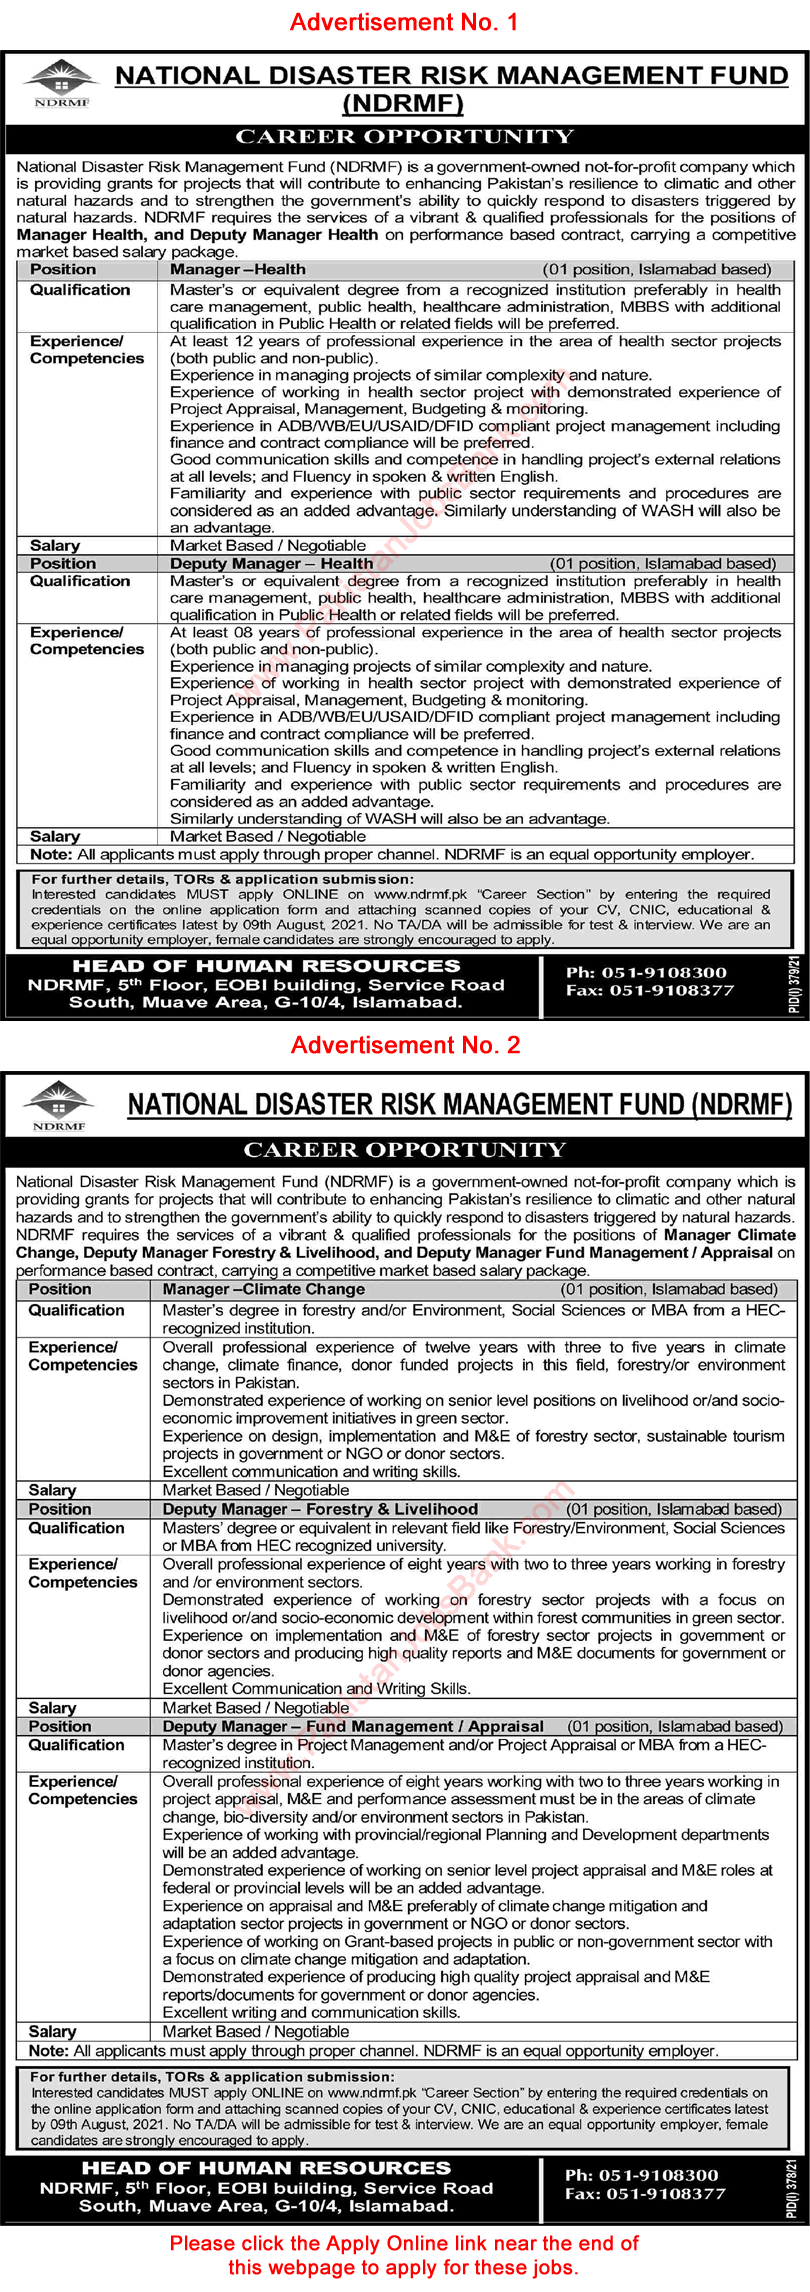 NDRMF Jobs 2021 July / August Apply Online National Disaster Risk Management Fund Latest